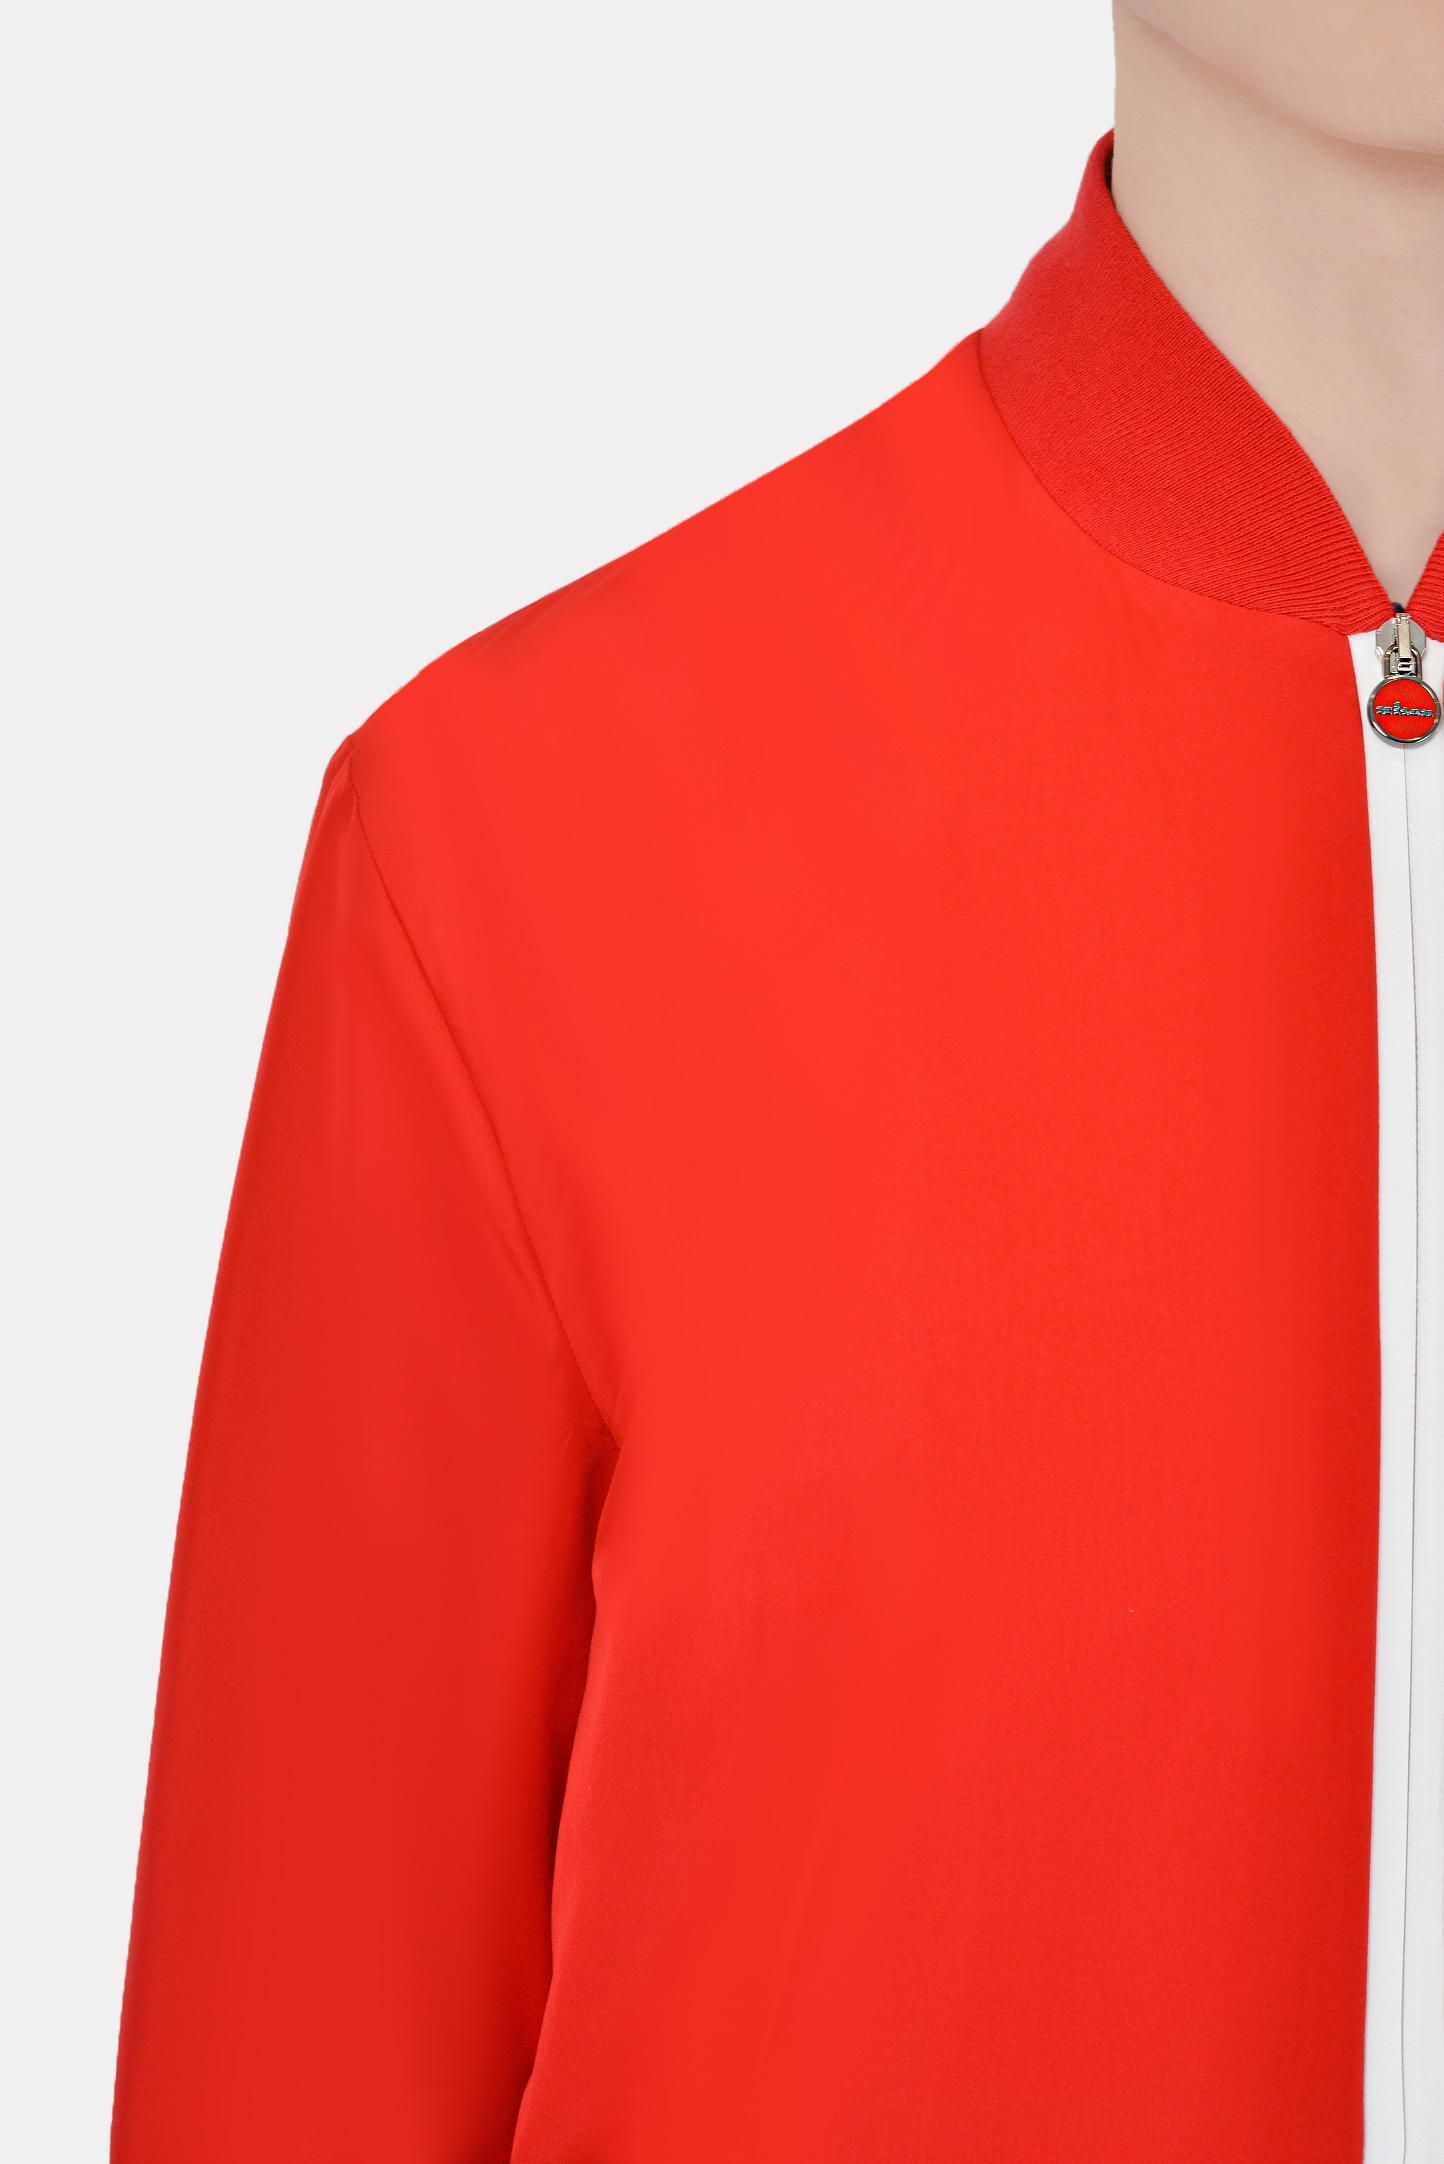 Куртка KITON UBLMSEAX07T09, цвет: Красный, Мужской